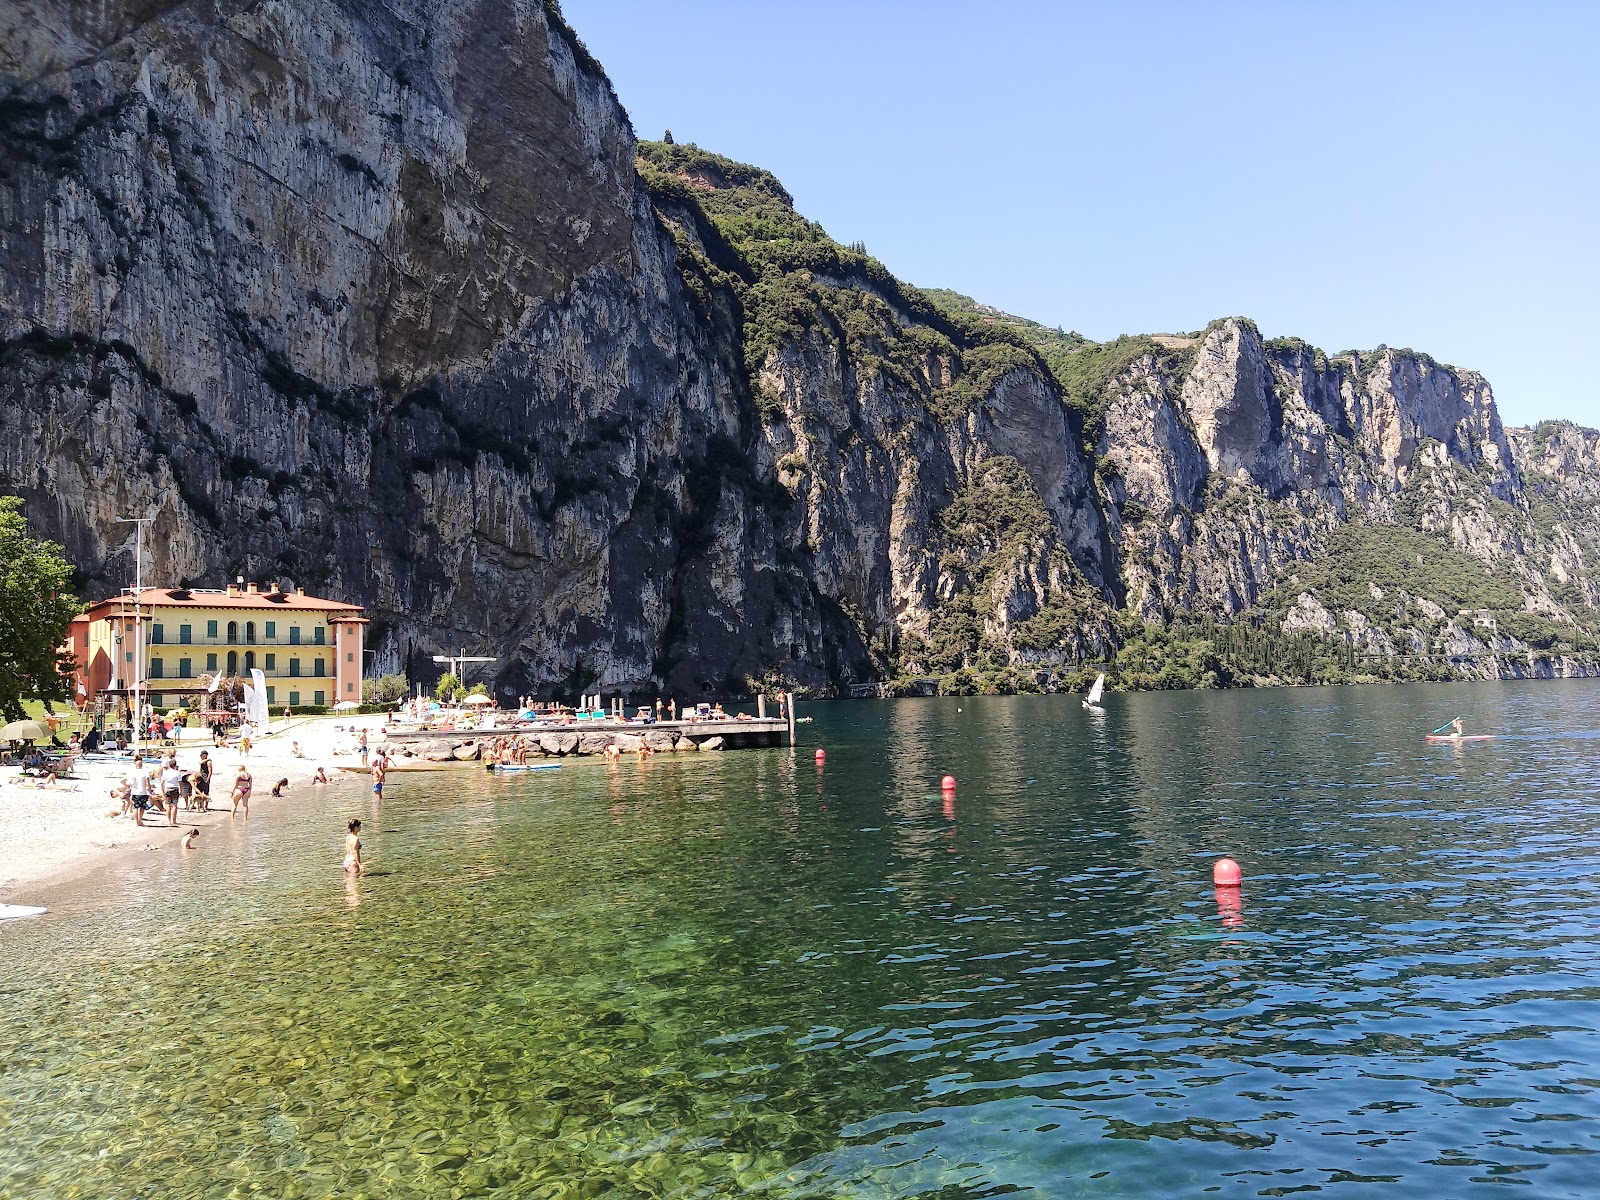 Foto van Spiaggia Campione del Garda met hoog niveau van netheid